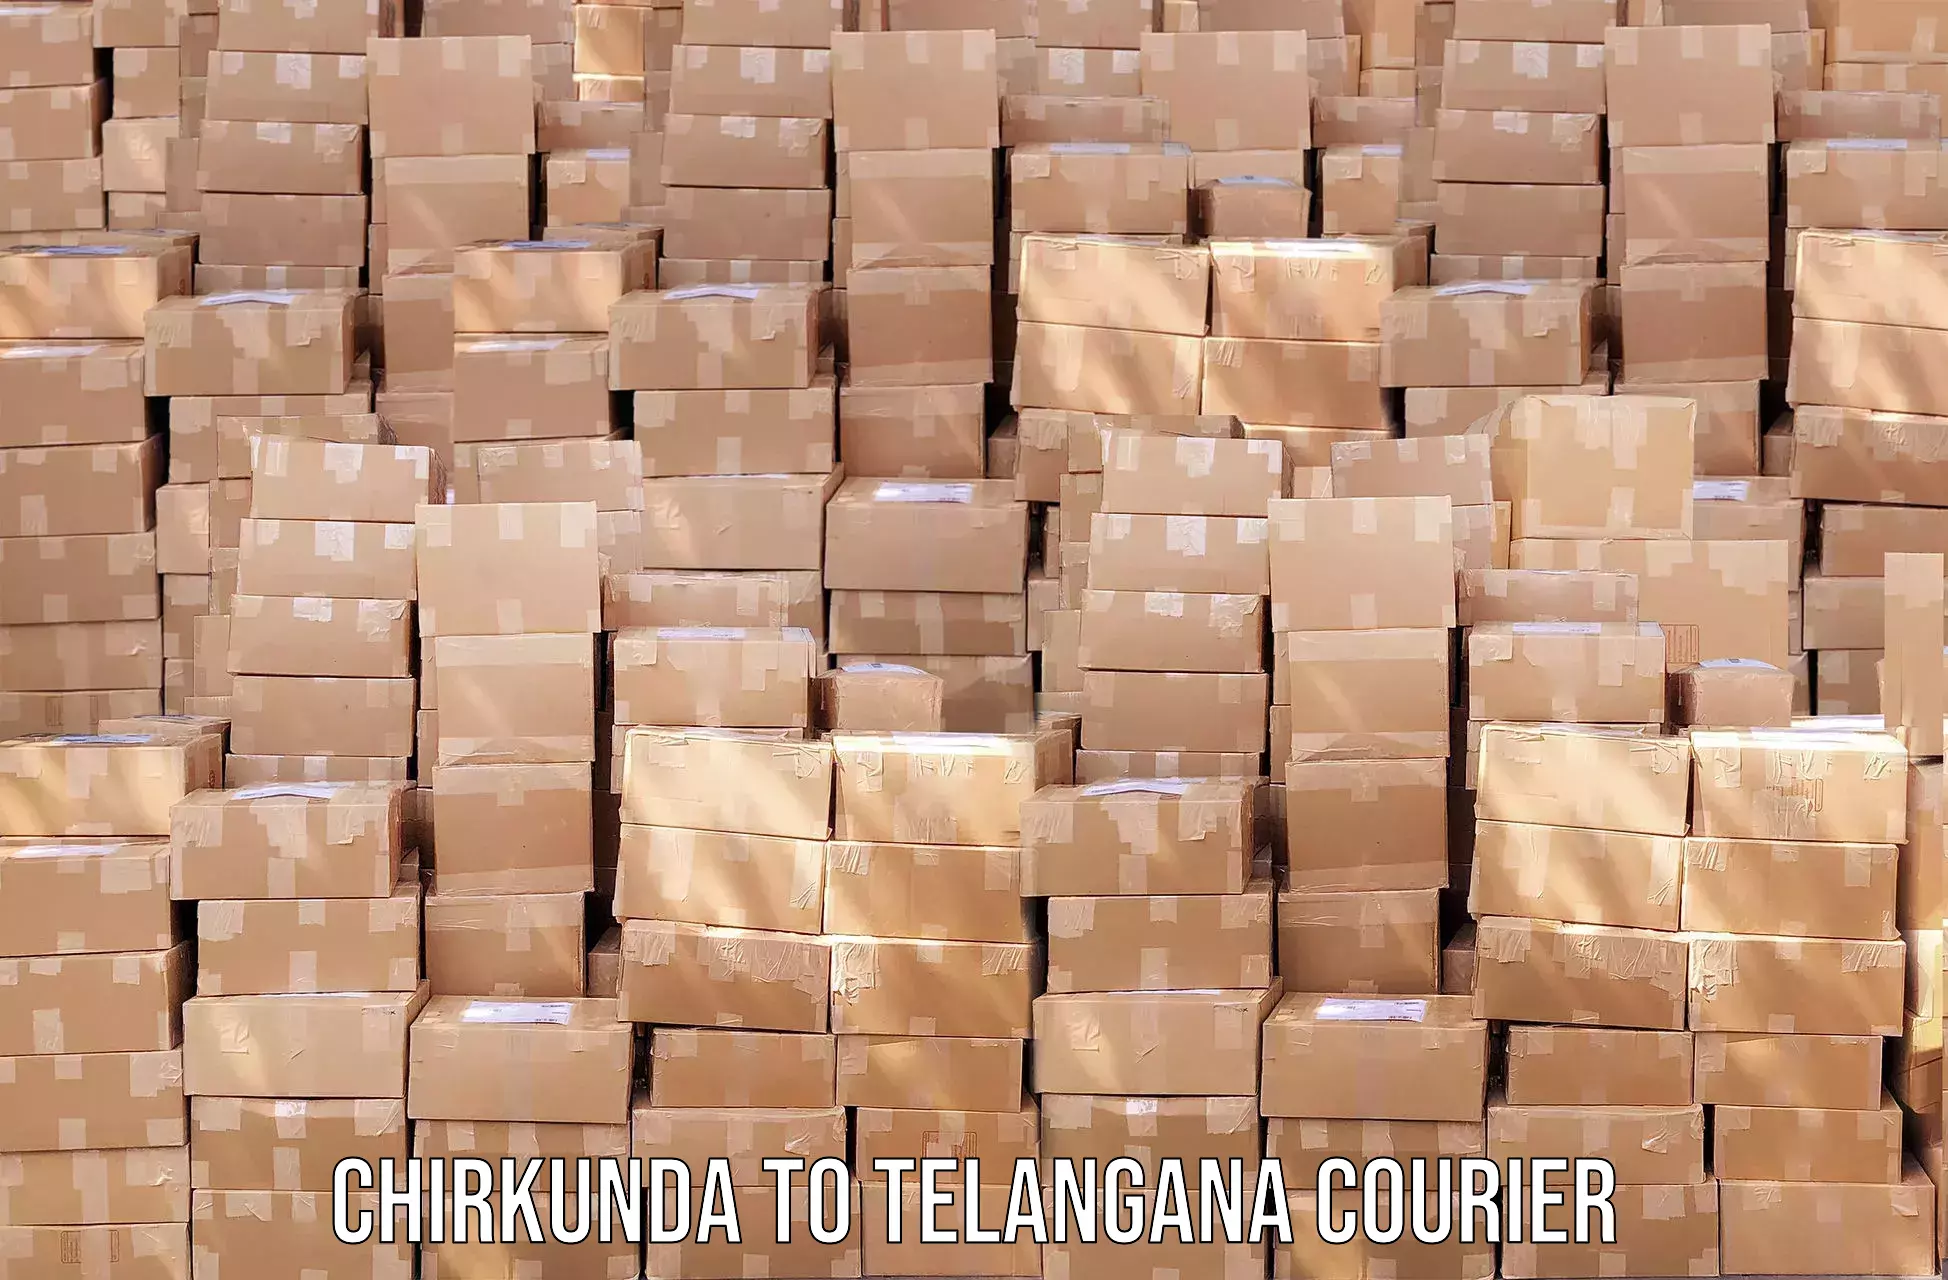 Courier service comparison Chirkunda to Kothakota